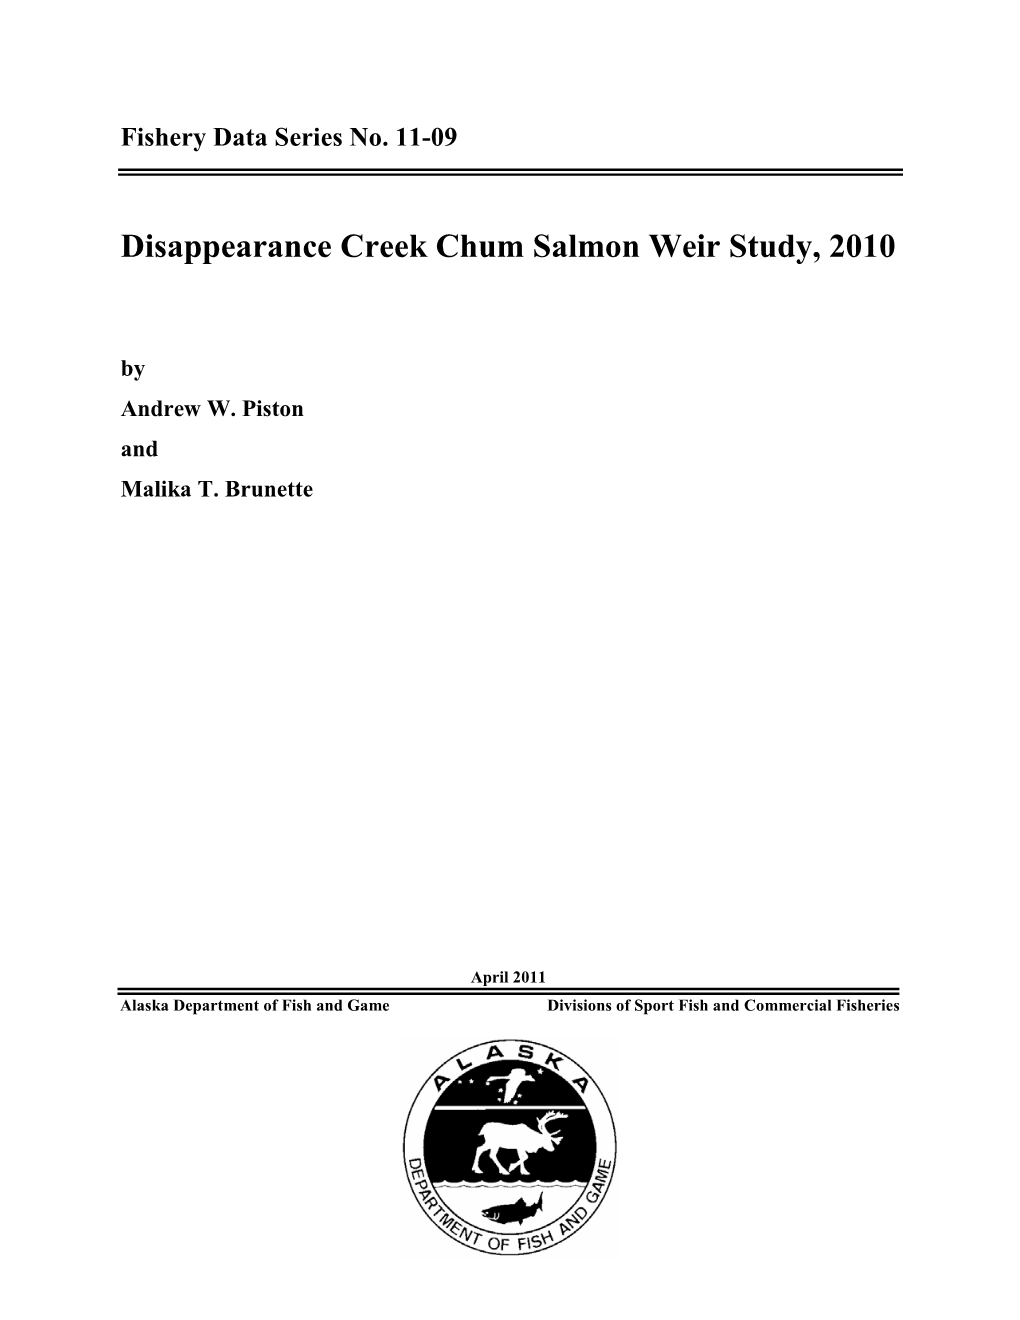 Disappearance Creek Chum Salmon Weir Study, 2010